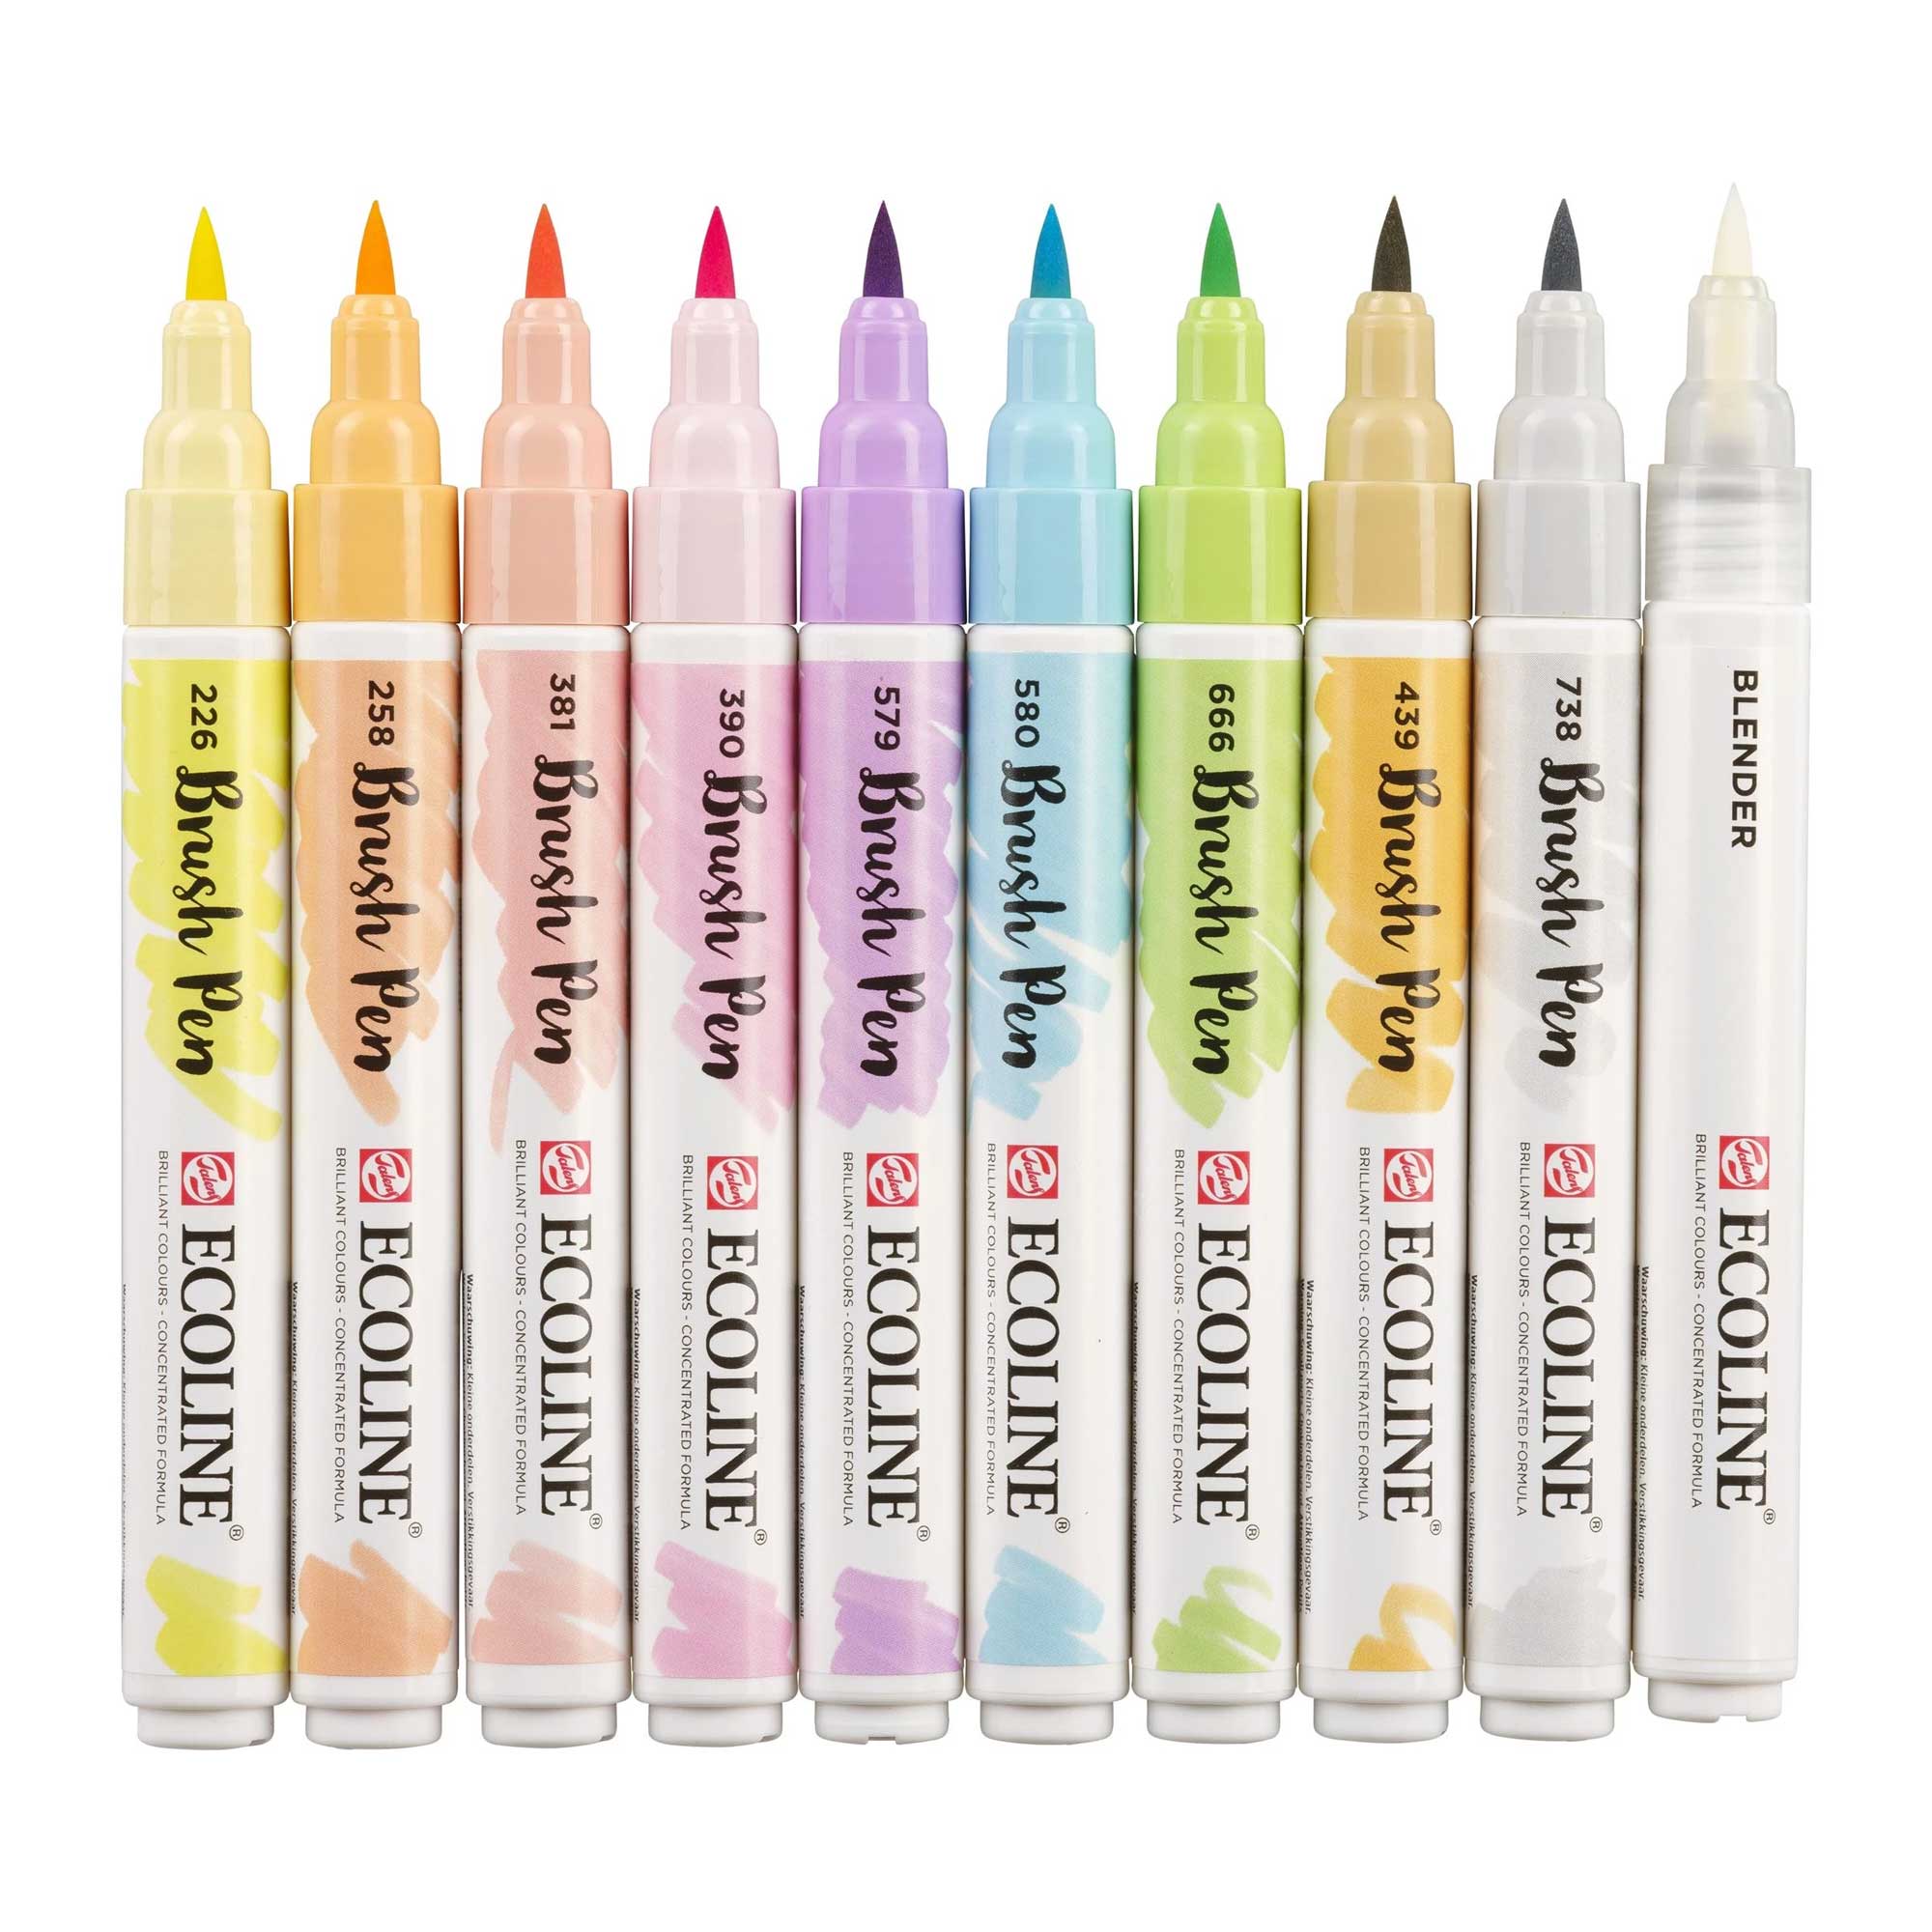 Talens Ecoline Brush Pen 10 set, Hand Lettering Colors 